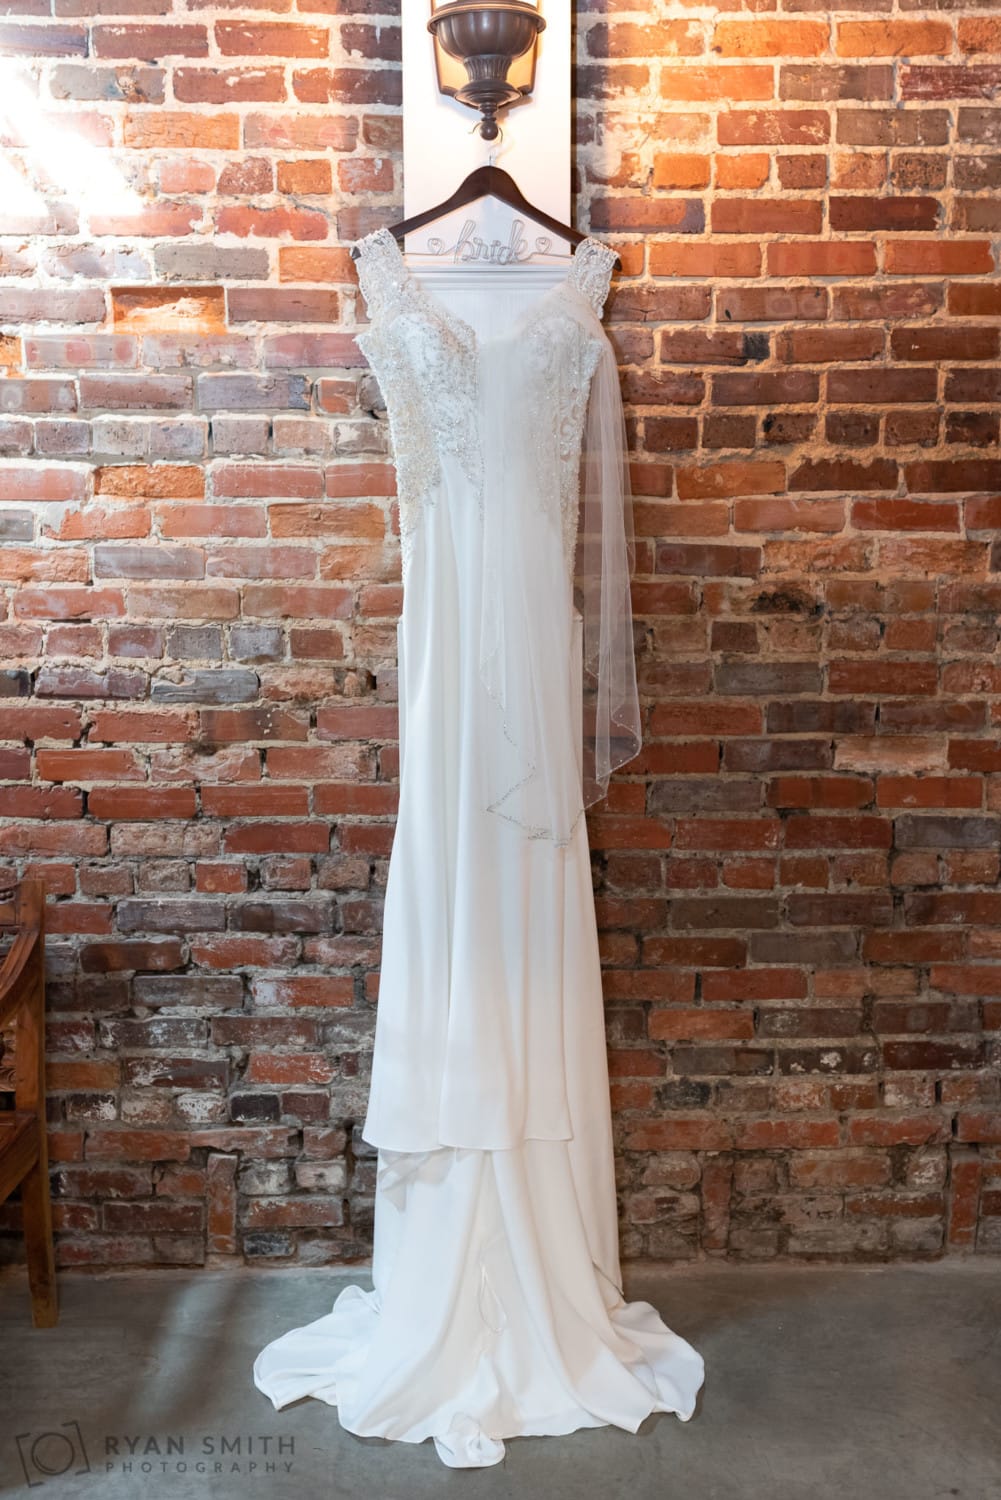 Bride's dress hanging on the brick wall - Hennigan Salon - Conway